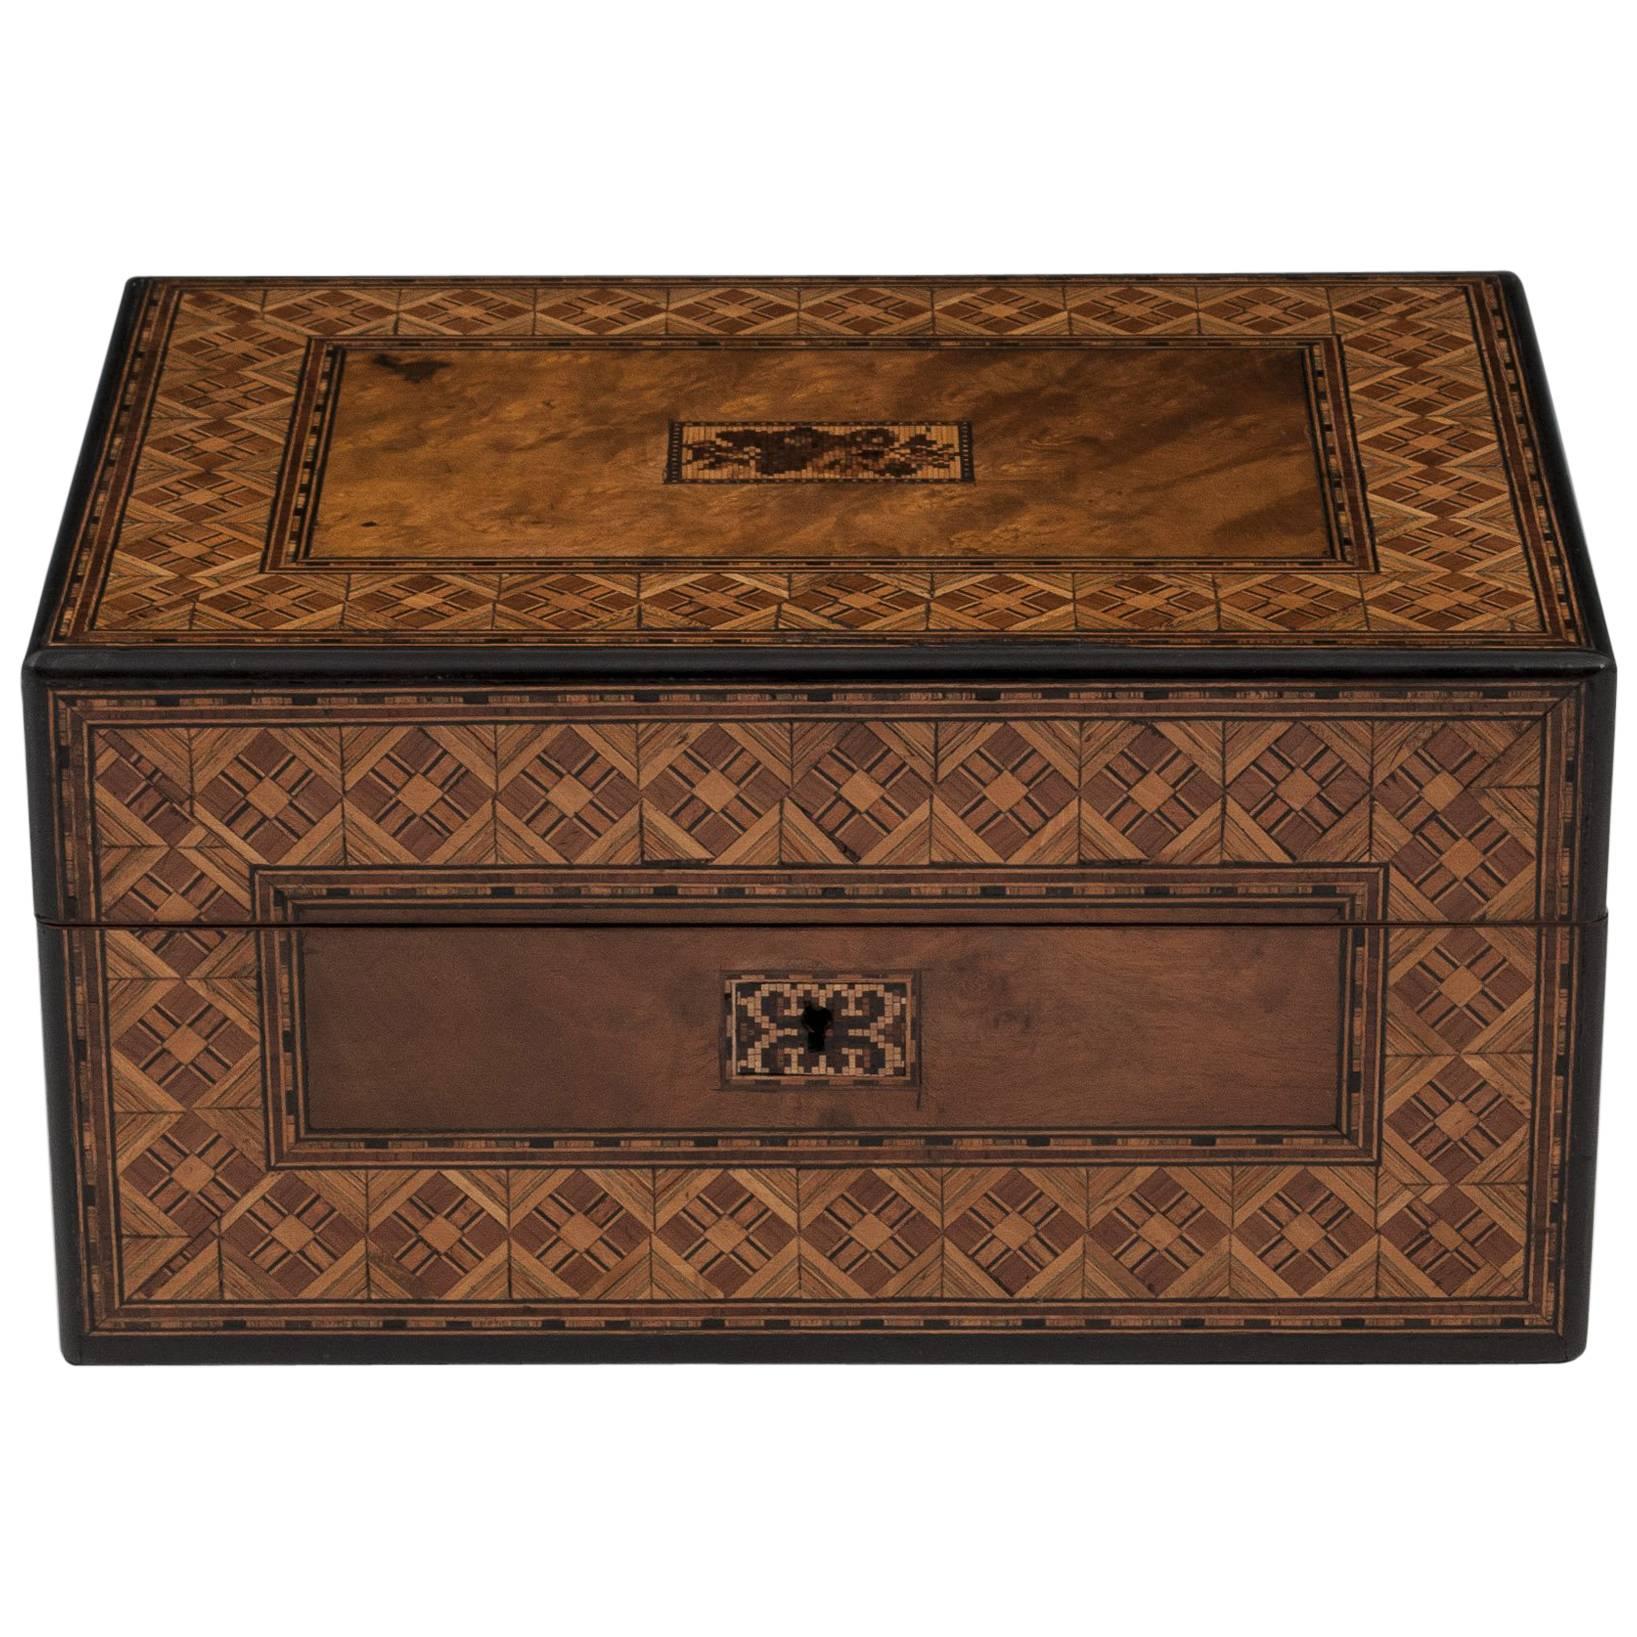 Walnut Antique Jewelry Box with Tunbridge Style Borders, 19th Century